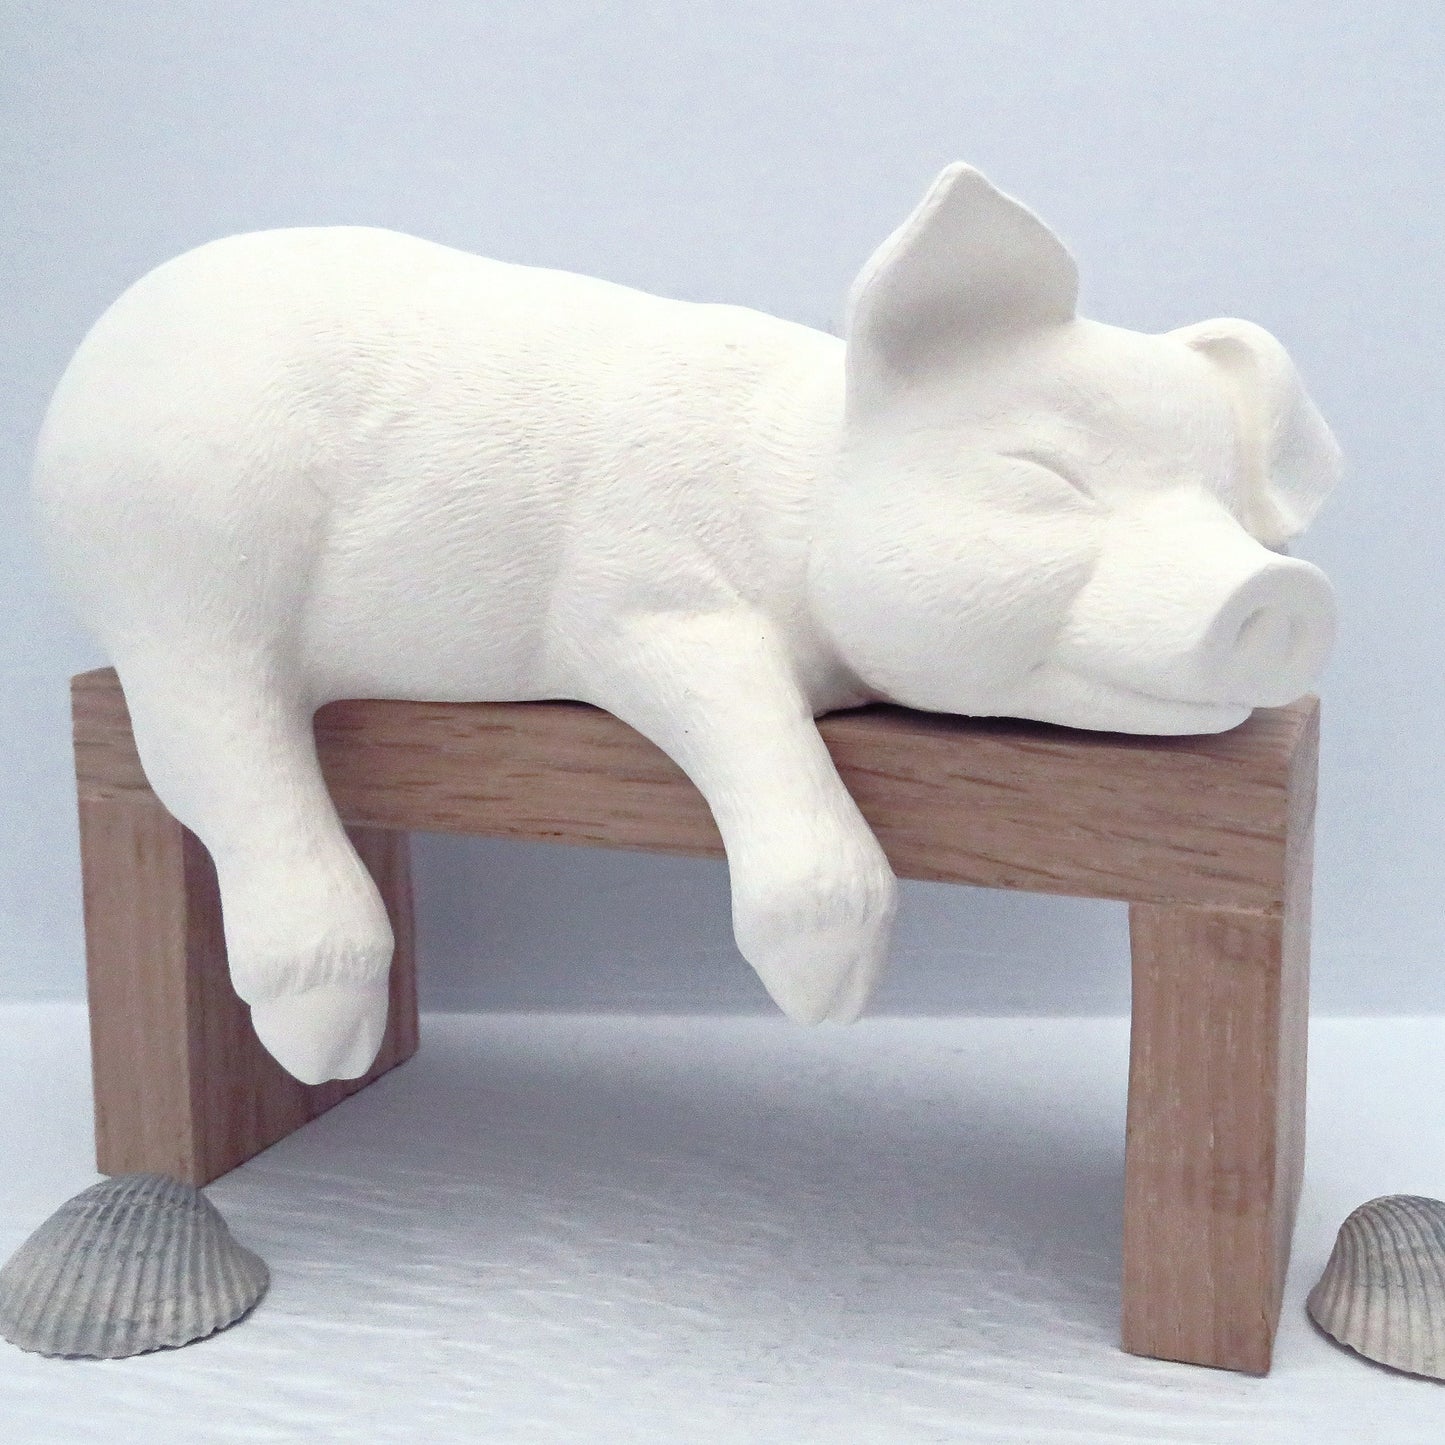 Ready to Paint Ceramic Bisque Shelf Sleeper Pig Figurine / Paintable Ceramic Pig Statue / Ceramics to Paint / Pig Lover Gift / Farm Decor